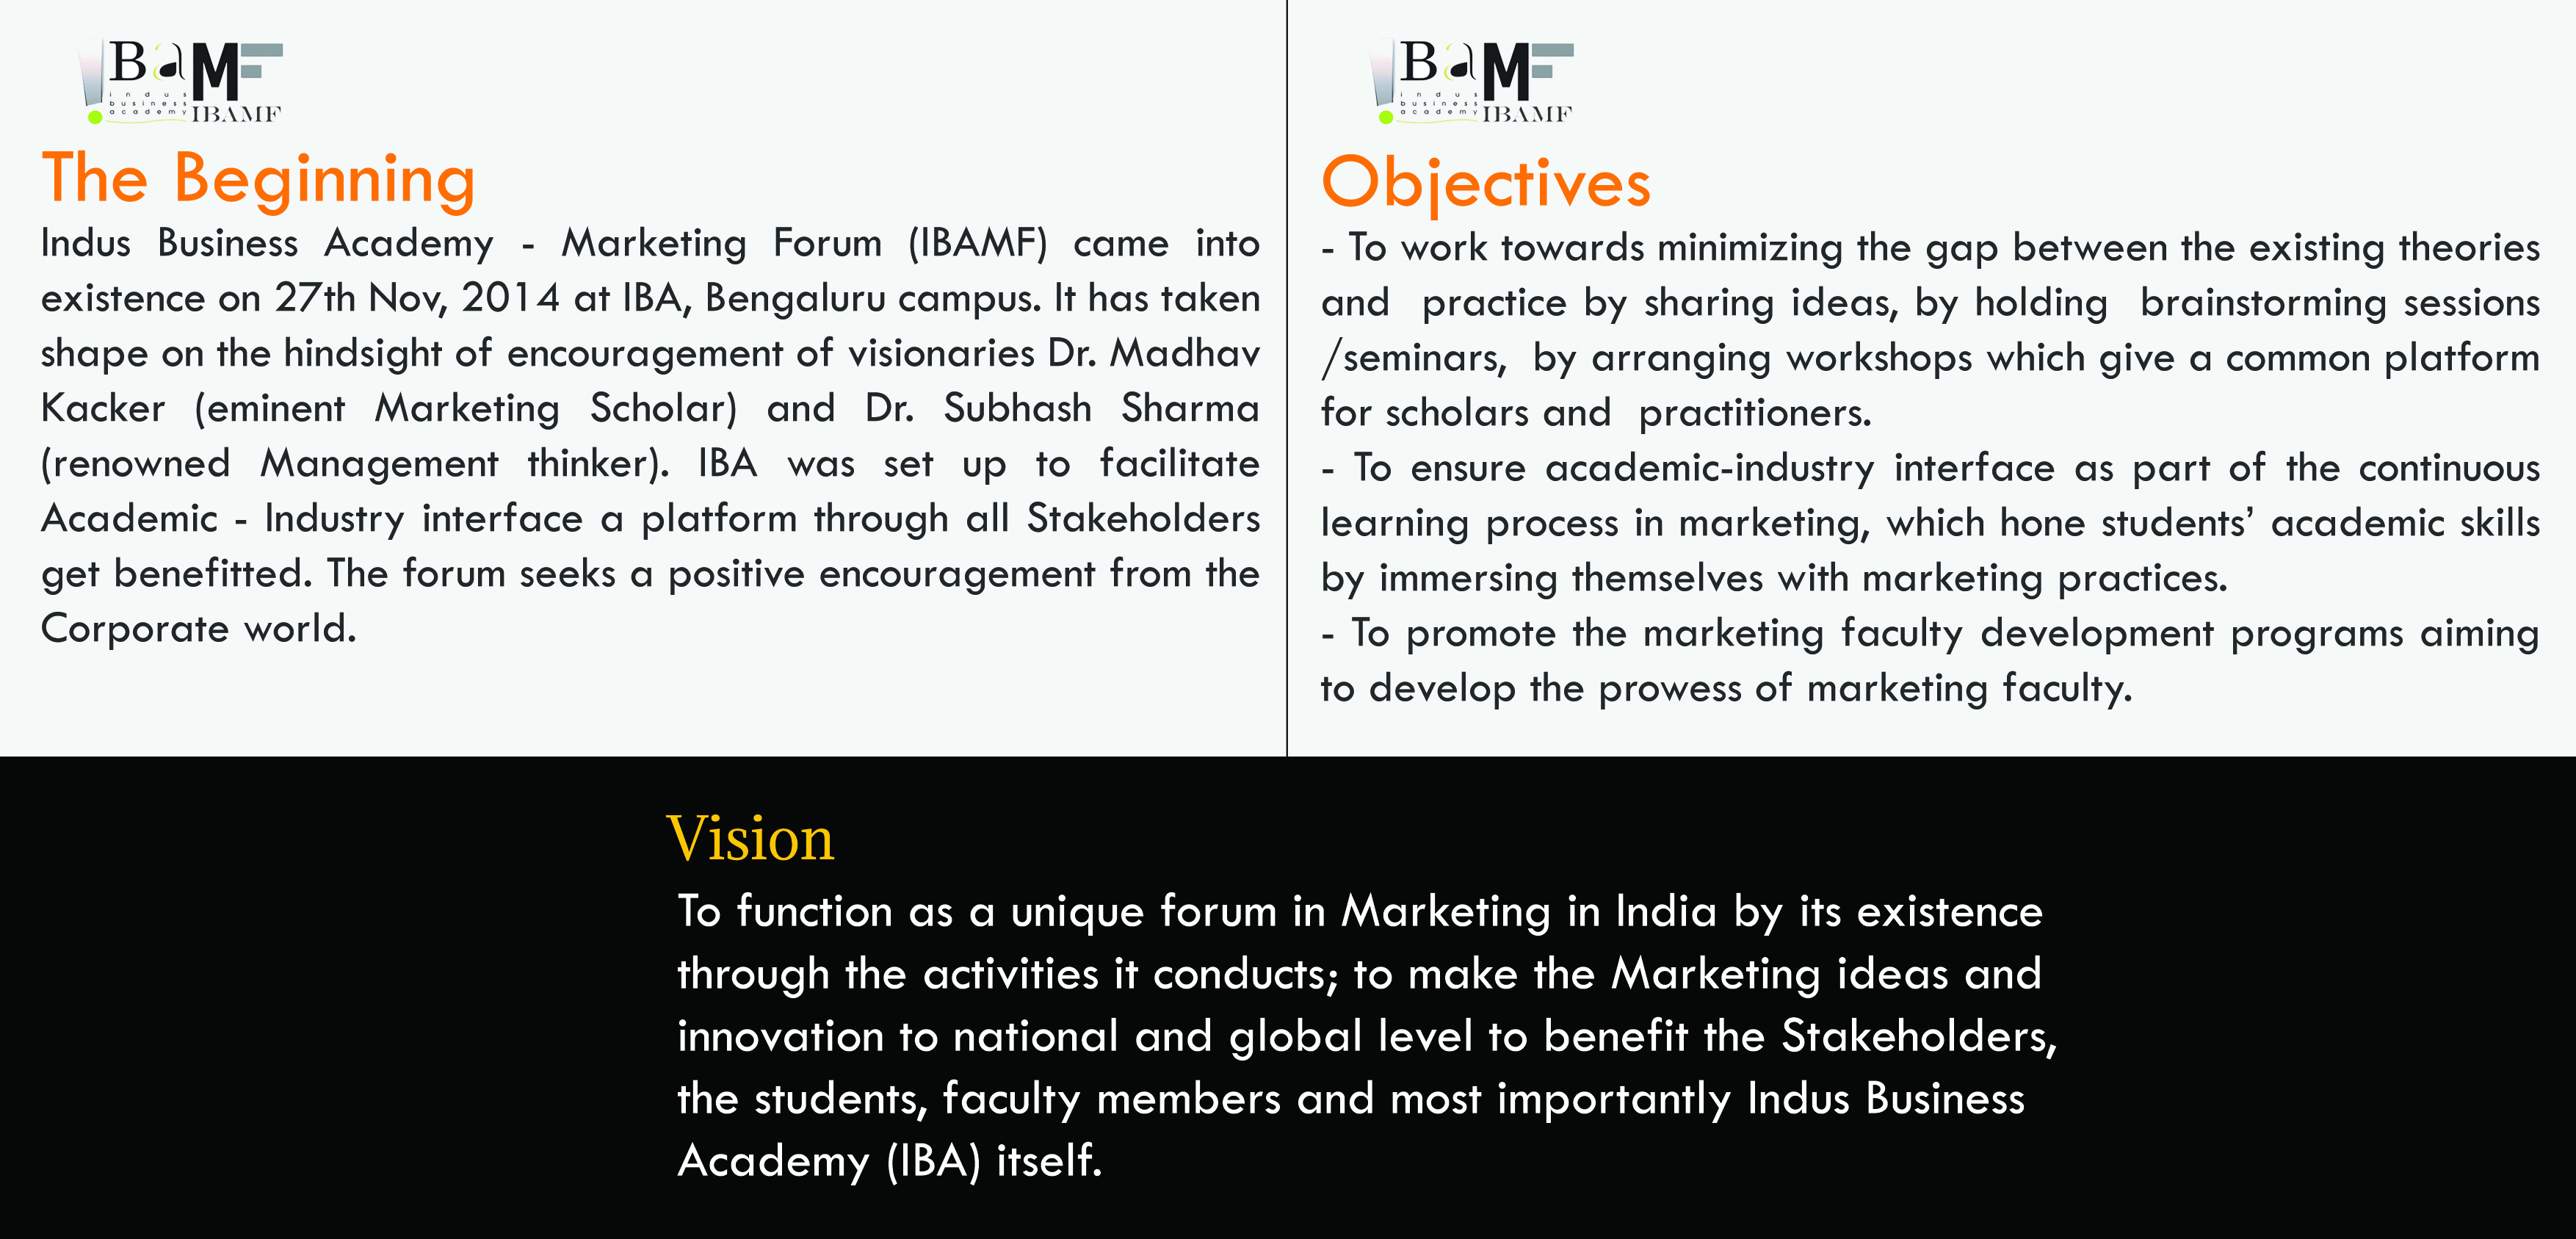 About IBA Marketing Forum (IBAMF)